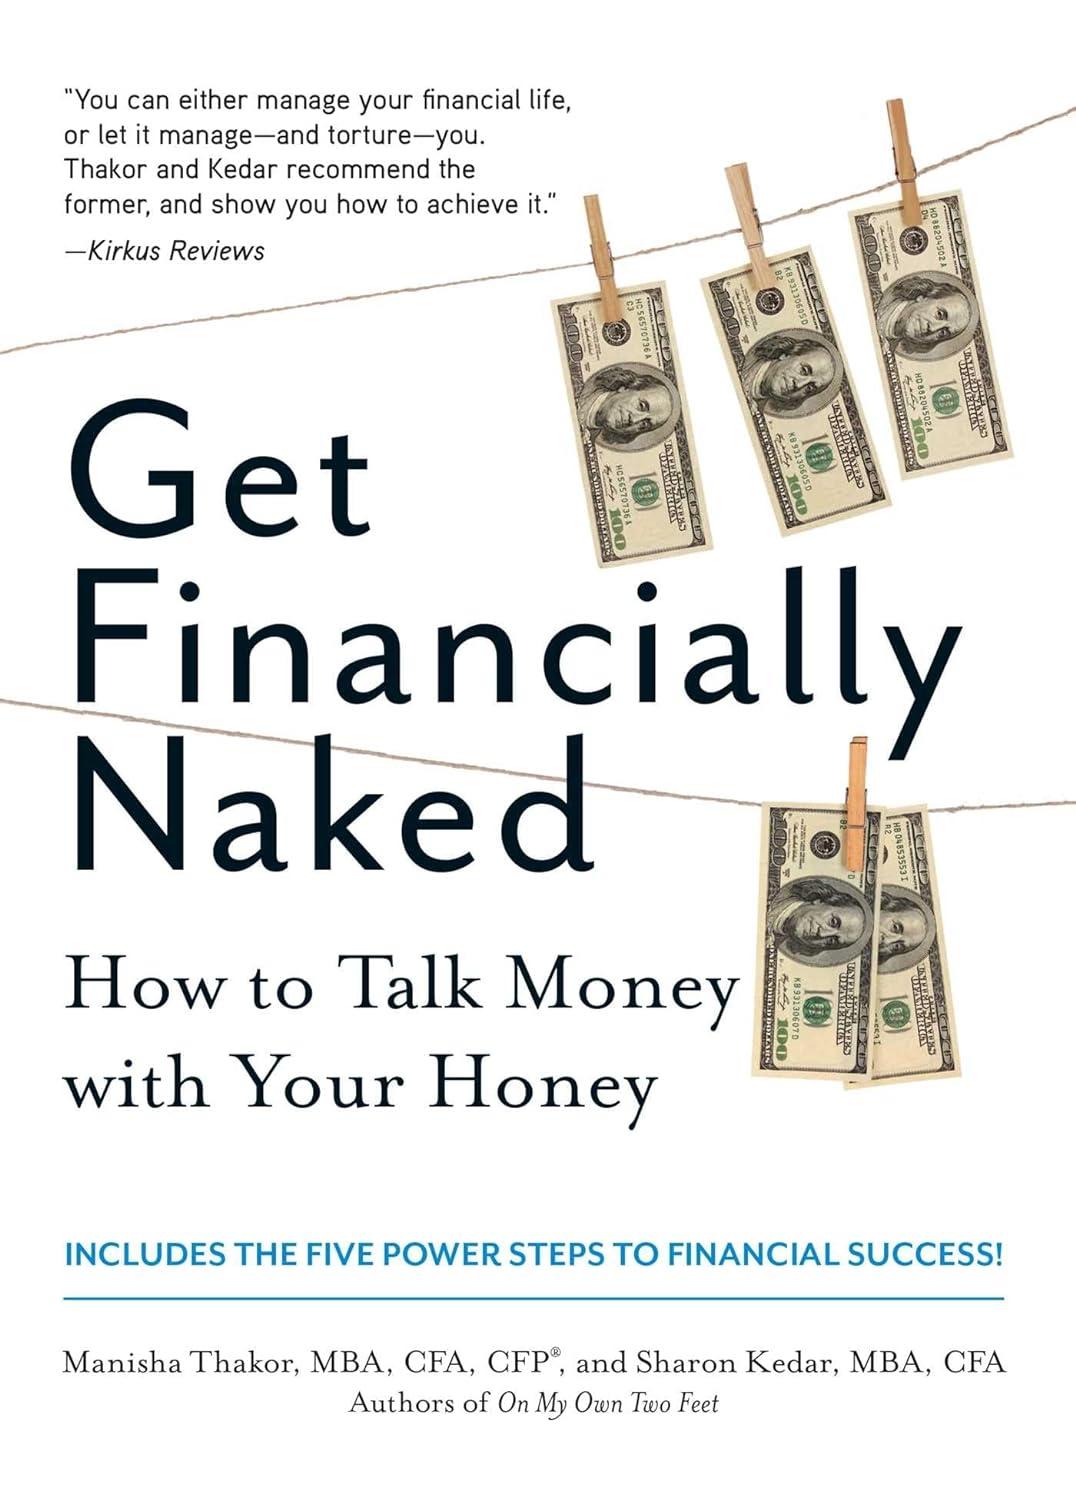 get financially naked how to talk money with your honey 1st edition manisha thakor ,sharon kedar 1440502013,